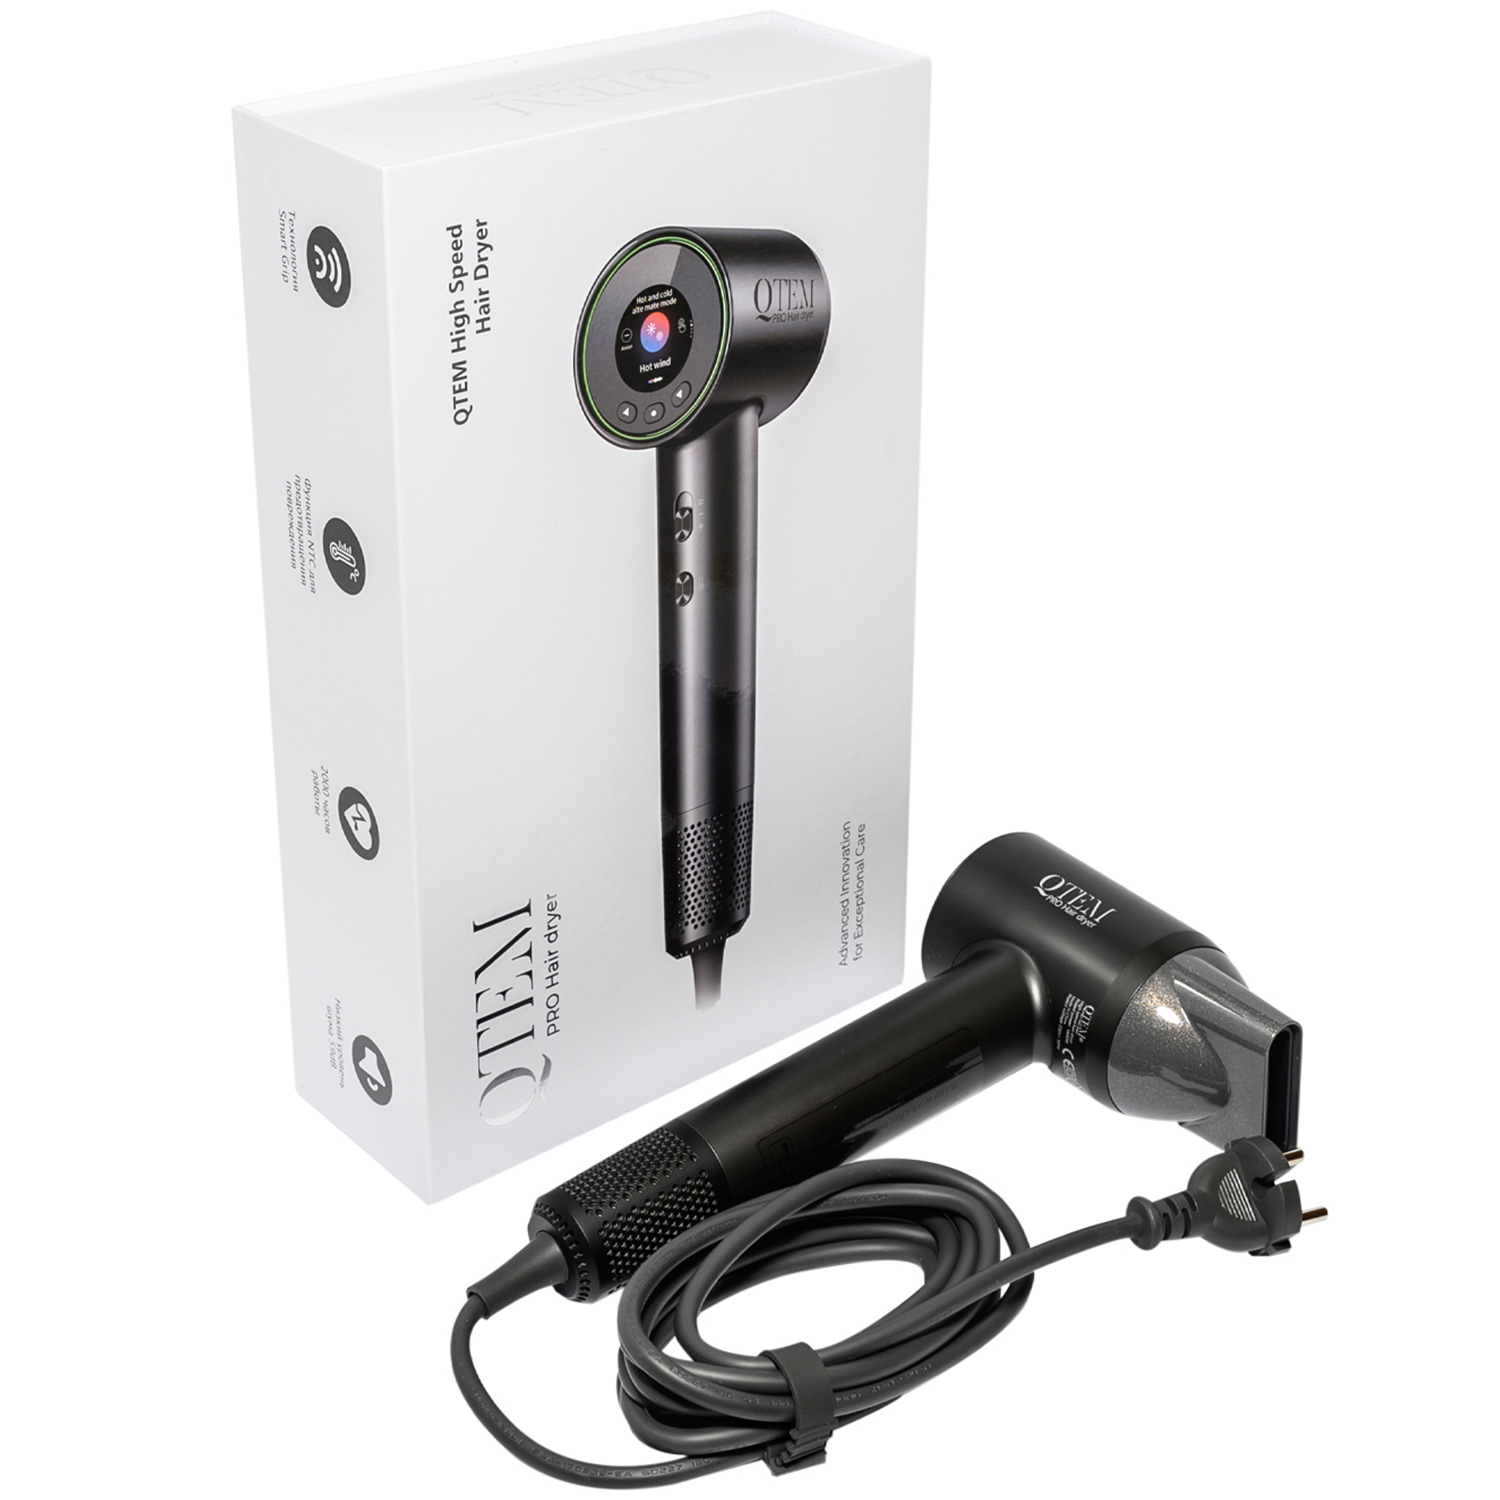 recording tools mcu 01 pro Qtem Фен Touch Sensing Hair Dryer, темно-серый, 1 шт (Qtem, Pro Tools)